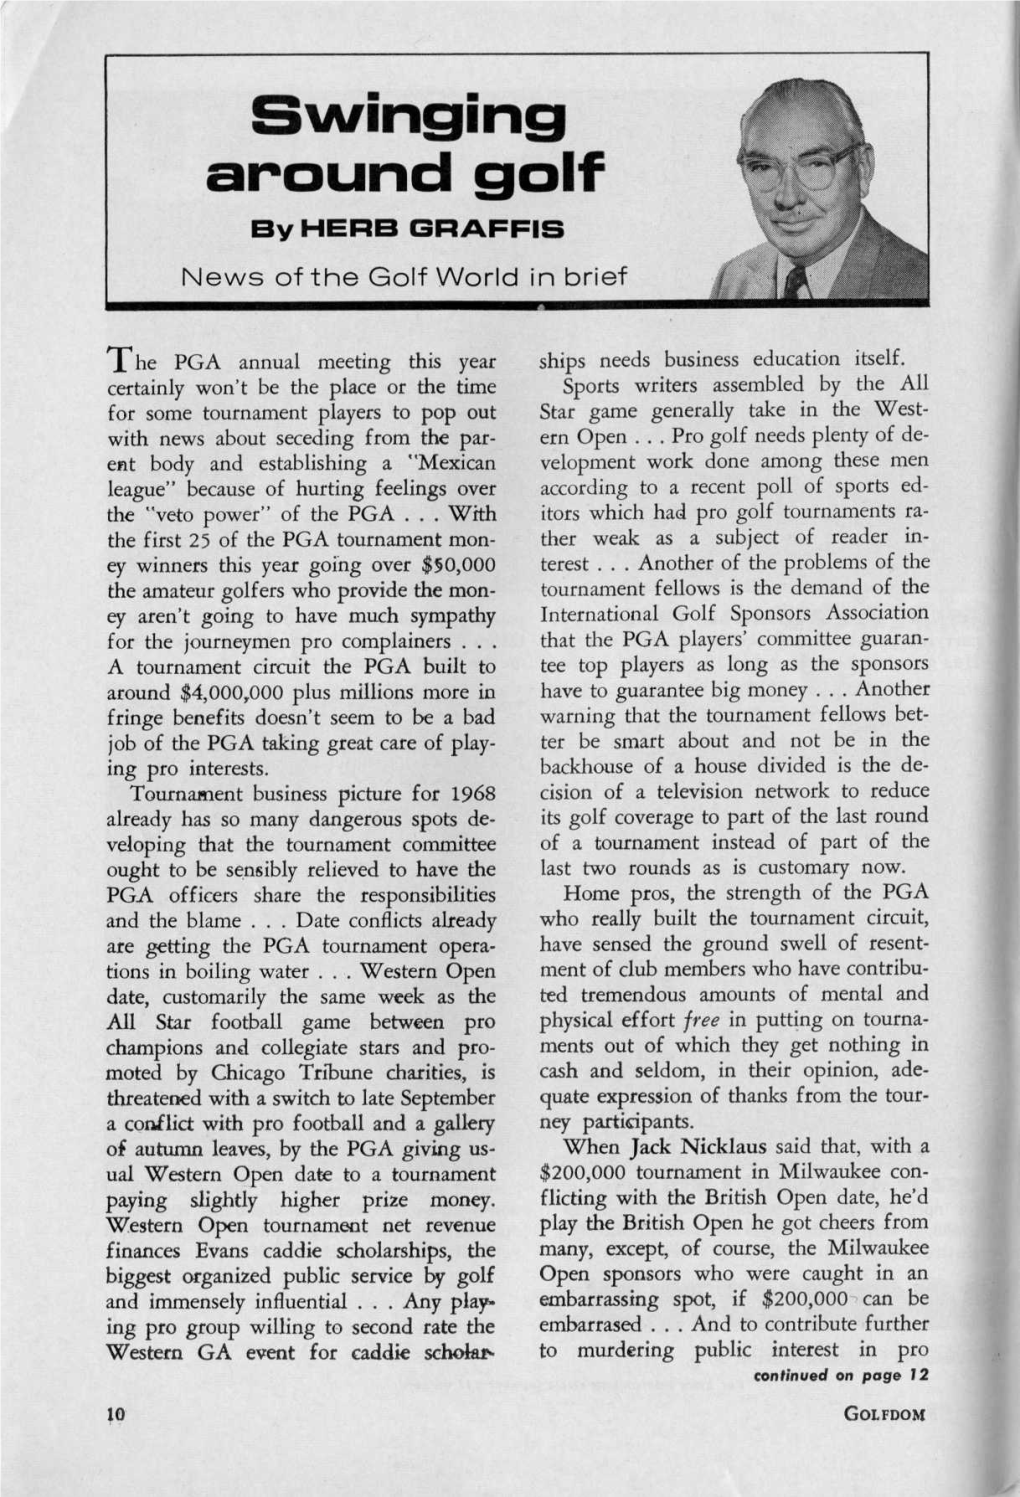 Swinging Around Golf by HERB GRAFFIS News of the Golf World in Brief